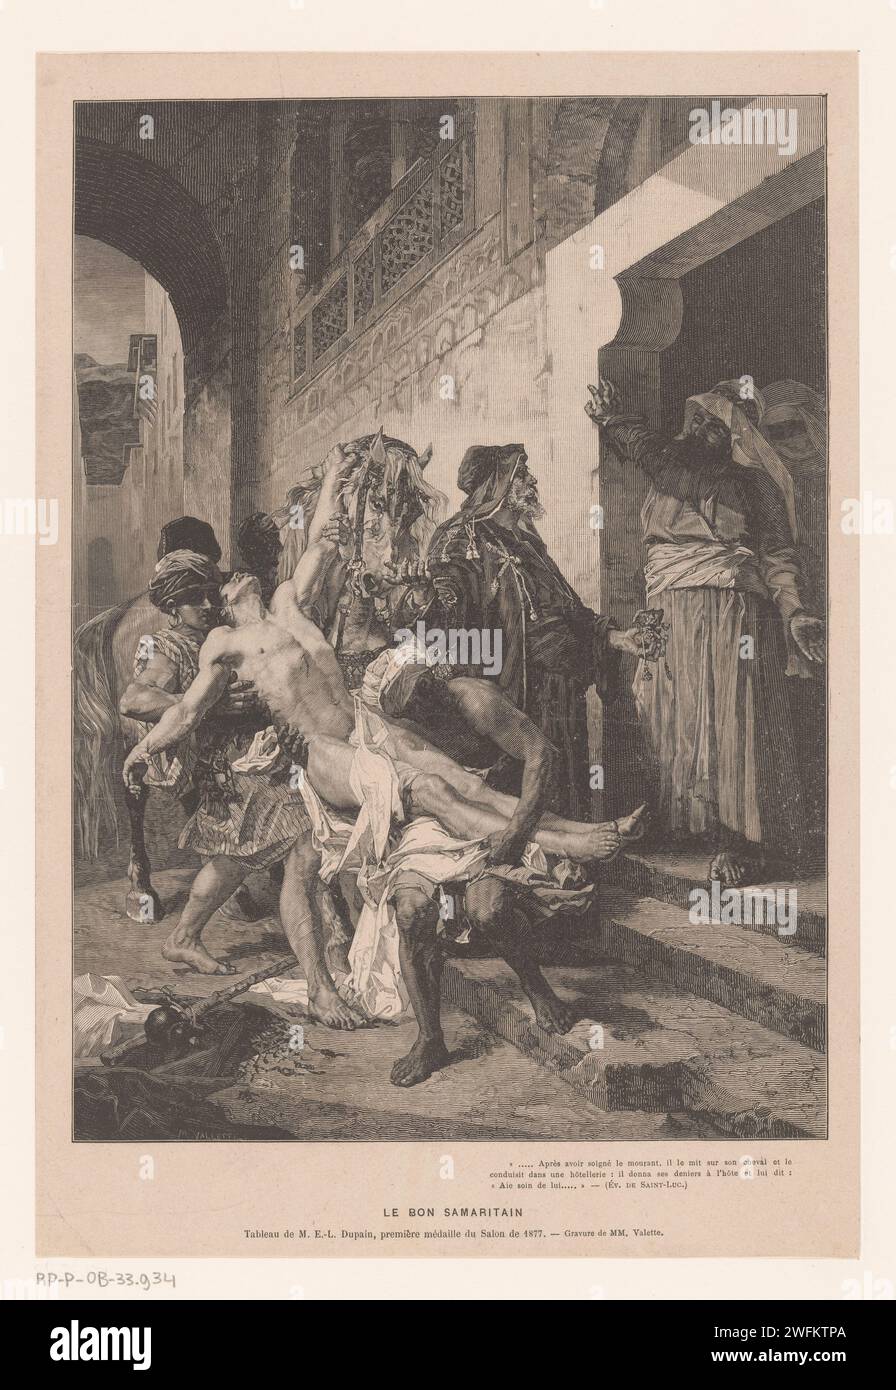 Parable of the Merciful Samaritan, Maurice Valette, After Edmond -Louis Dupain, 1877 - 1880 print   paper  the good Samaritan (Luke 10:30-37) Stock Photo